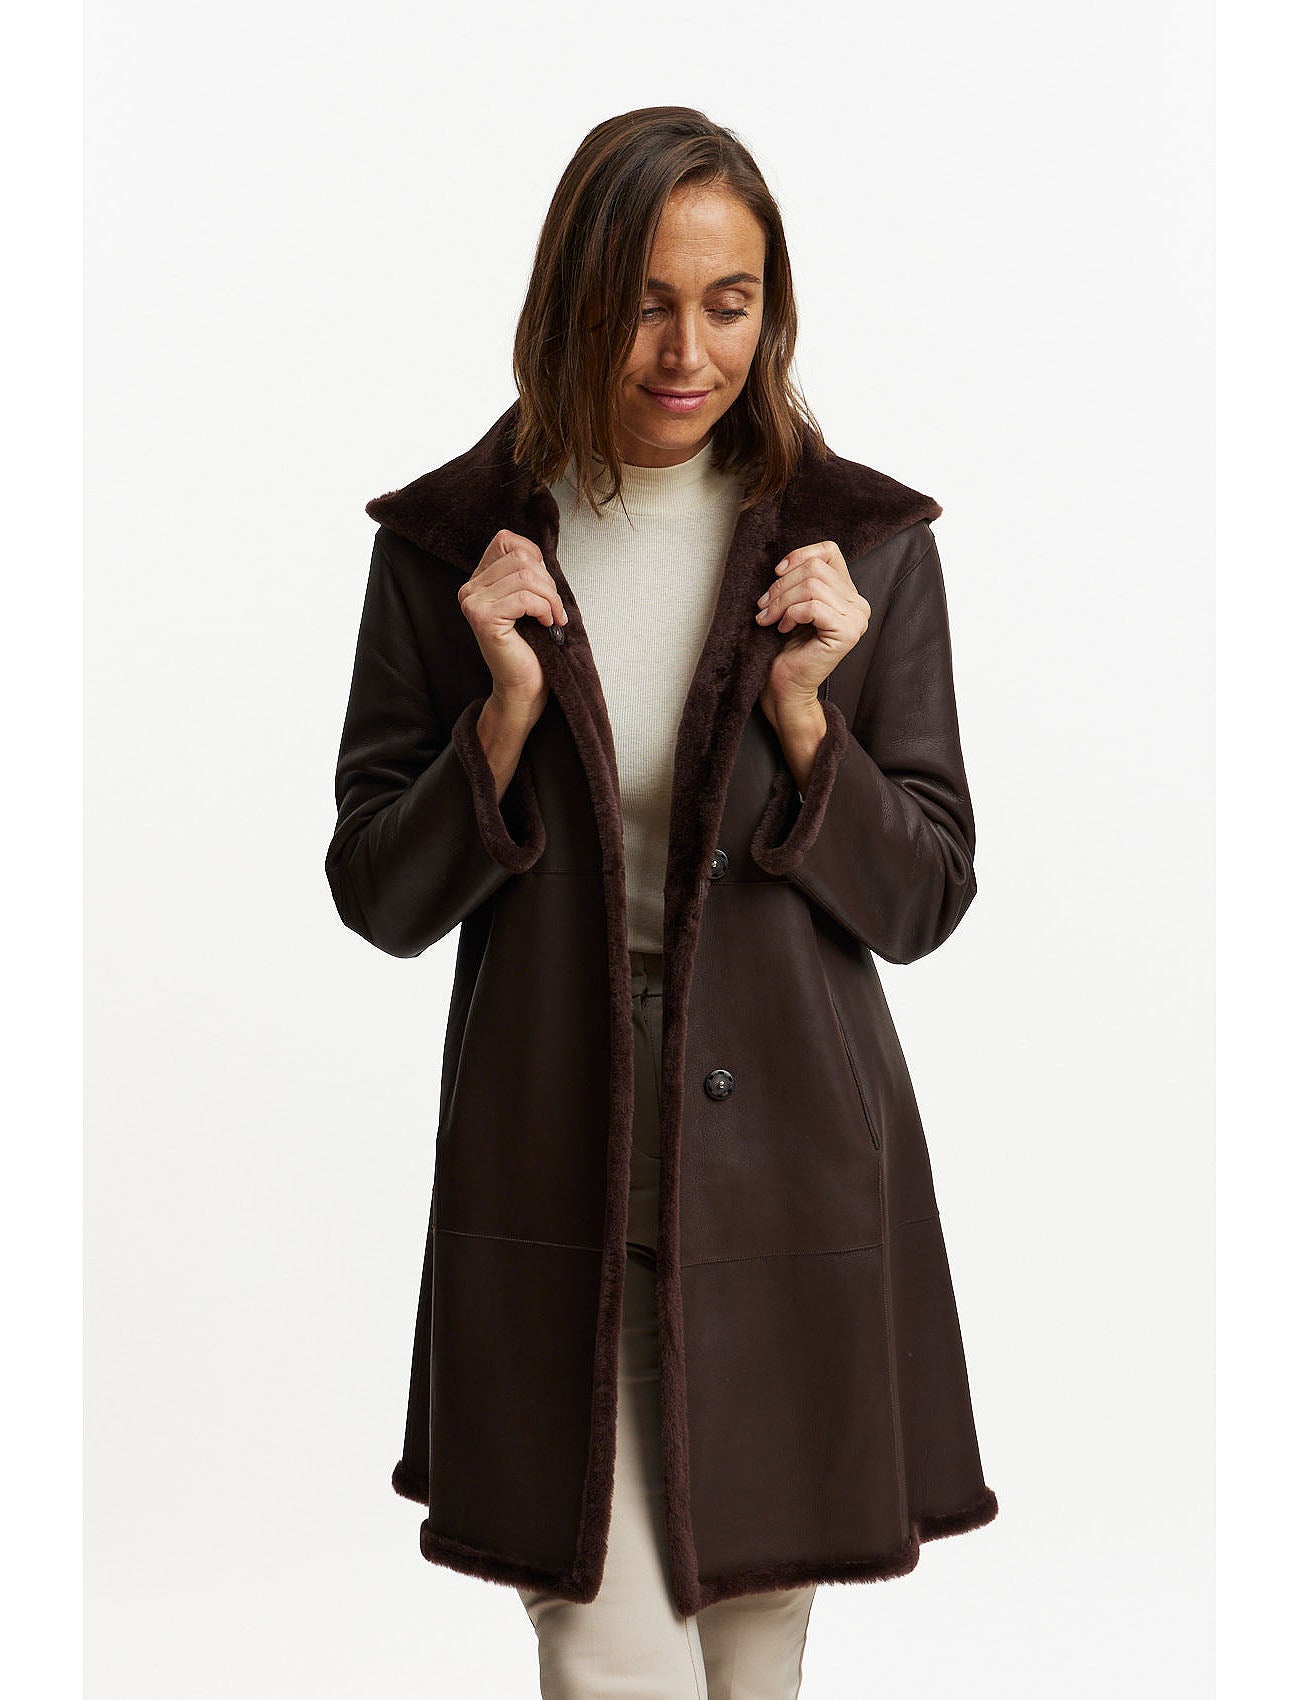 Merino lambskin jacket reversible 2in1 - brown